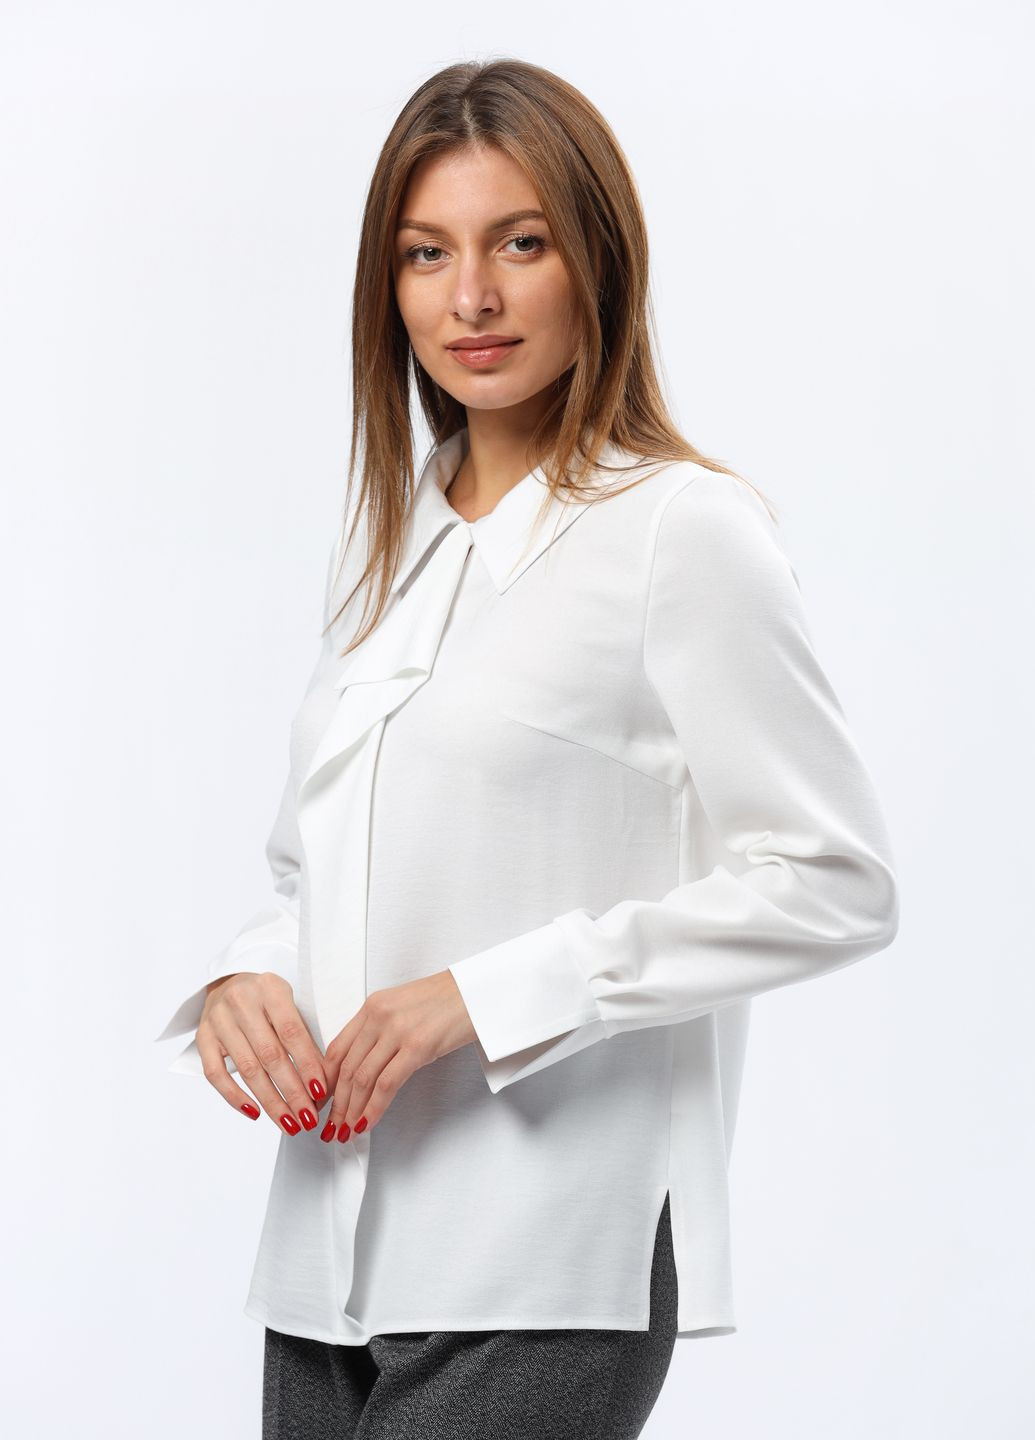 Біла демісезонна біла блуза з дизайнерською краваткою 1312 Cat Orange